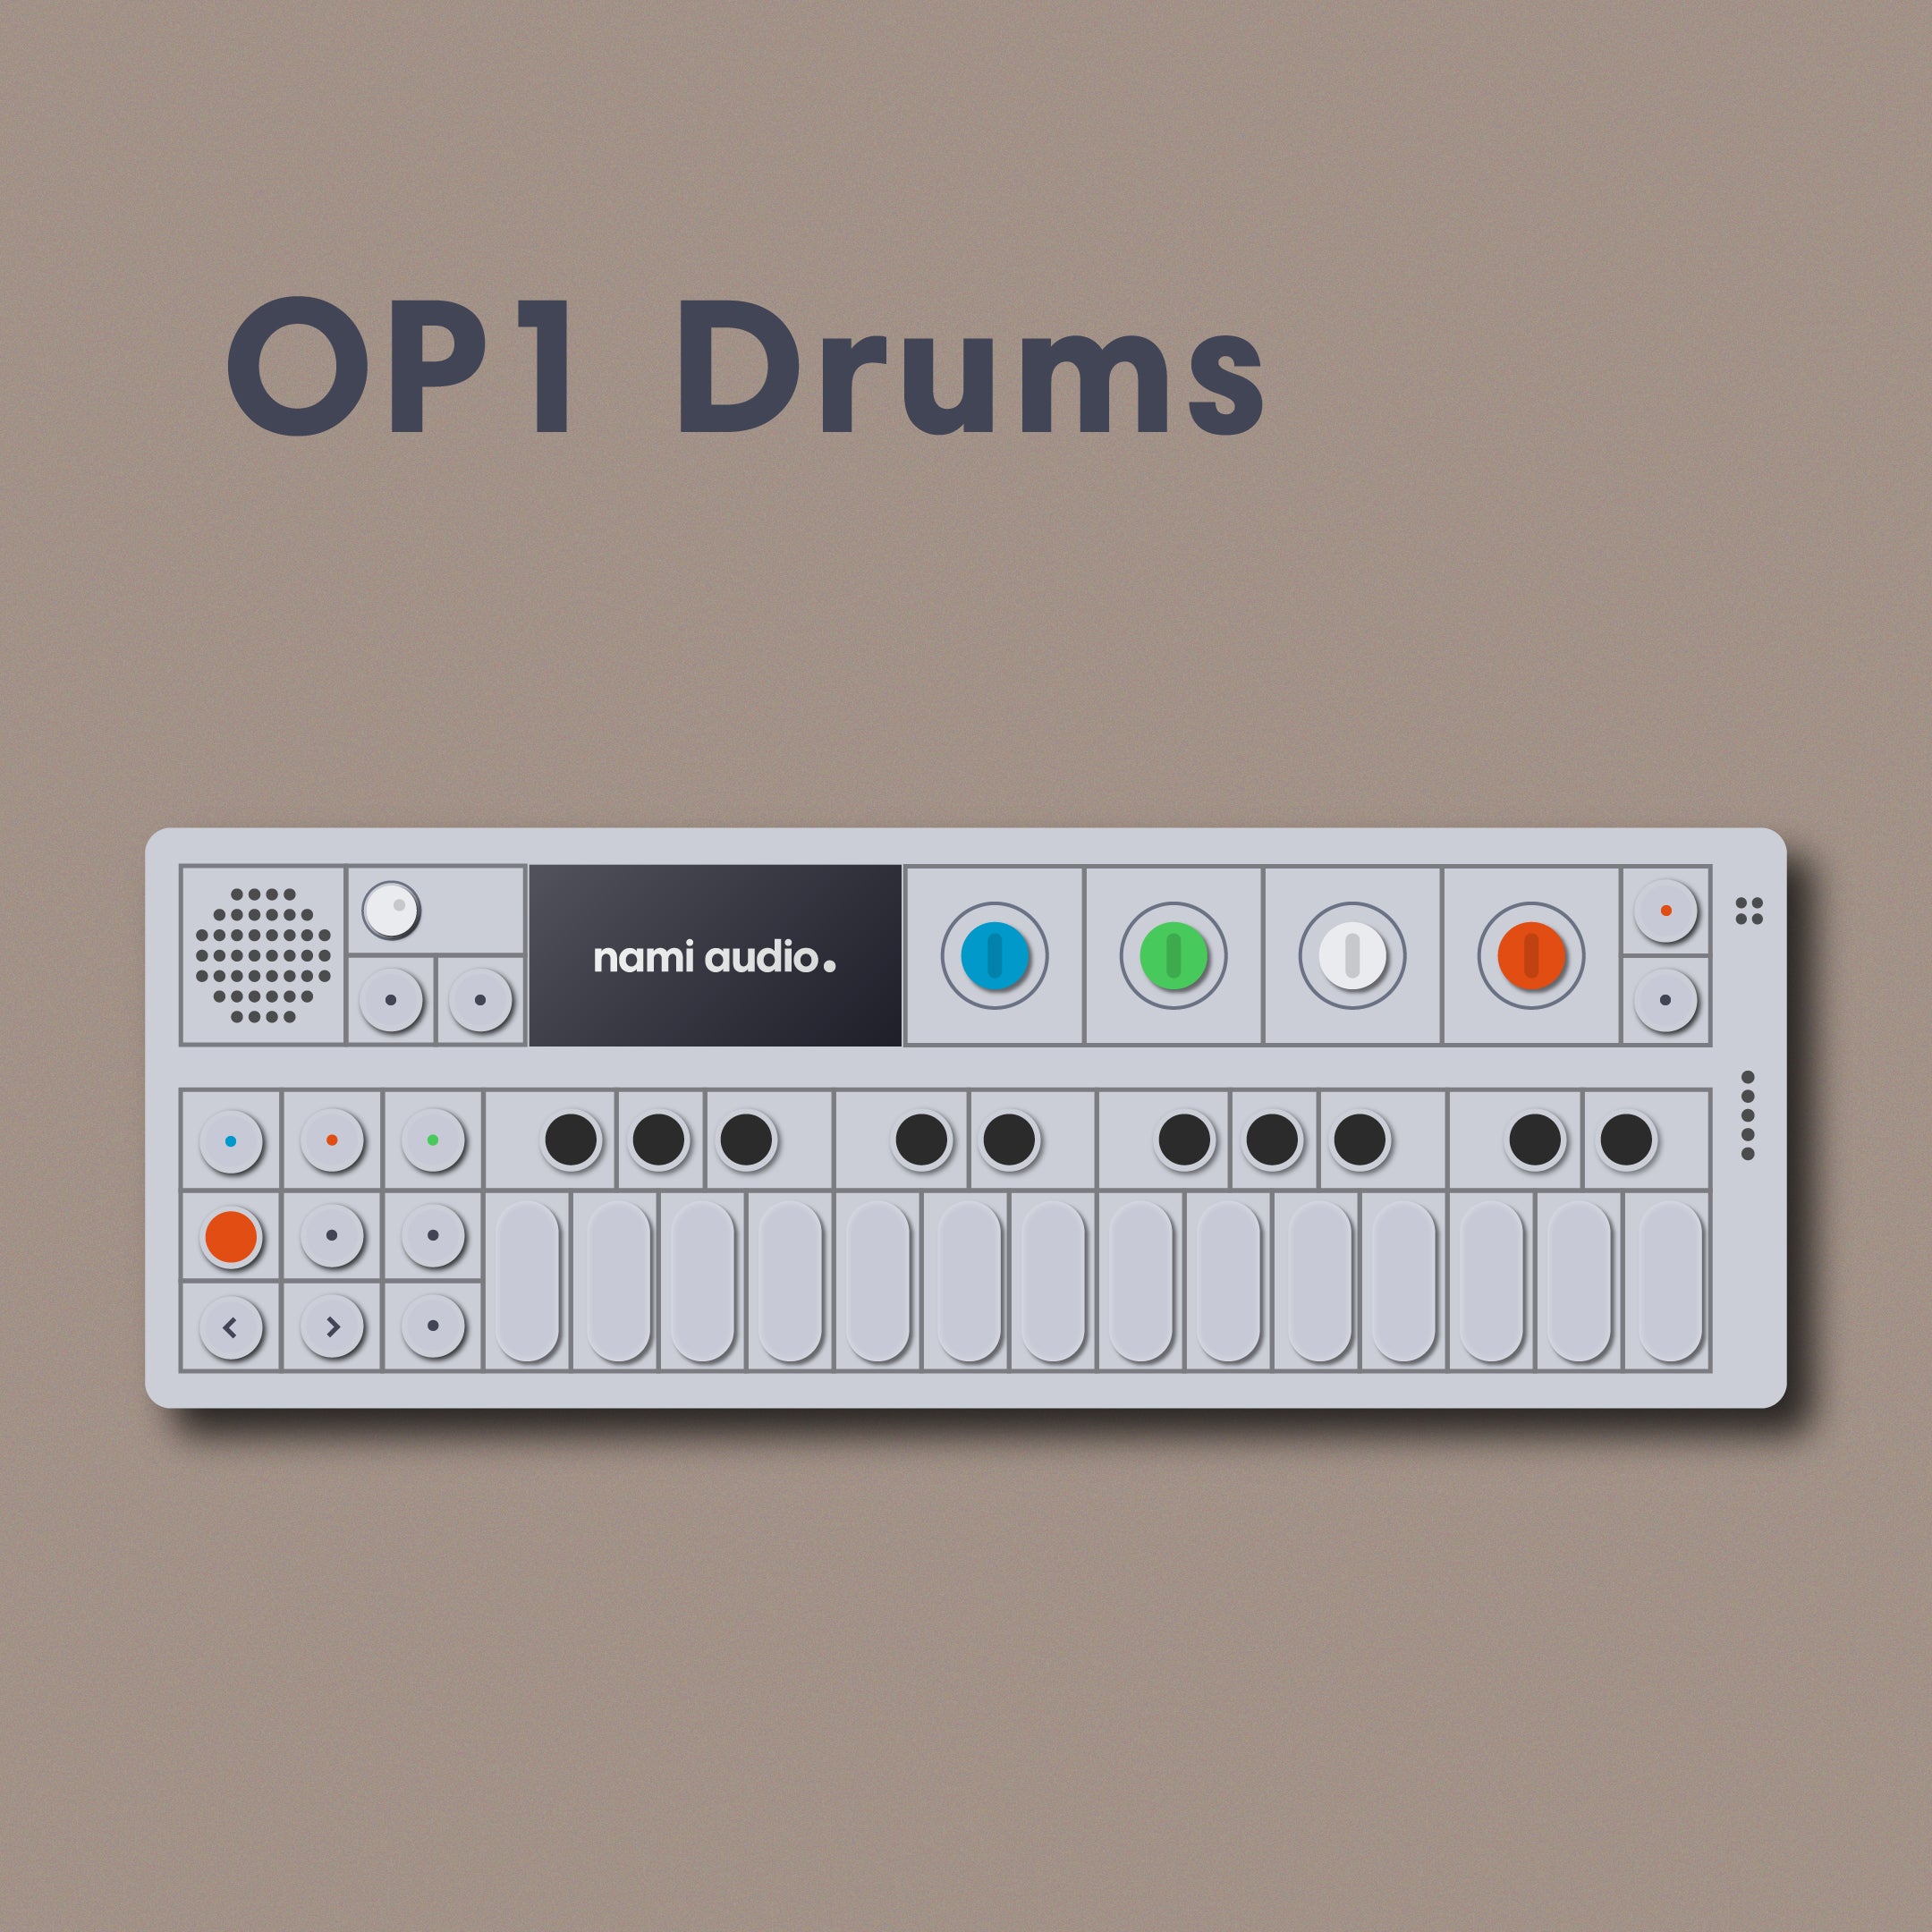 OP1 Drums